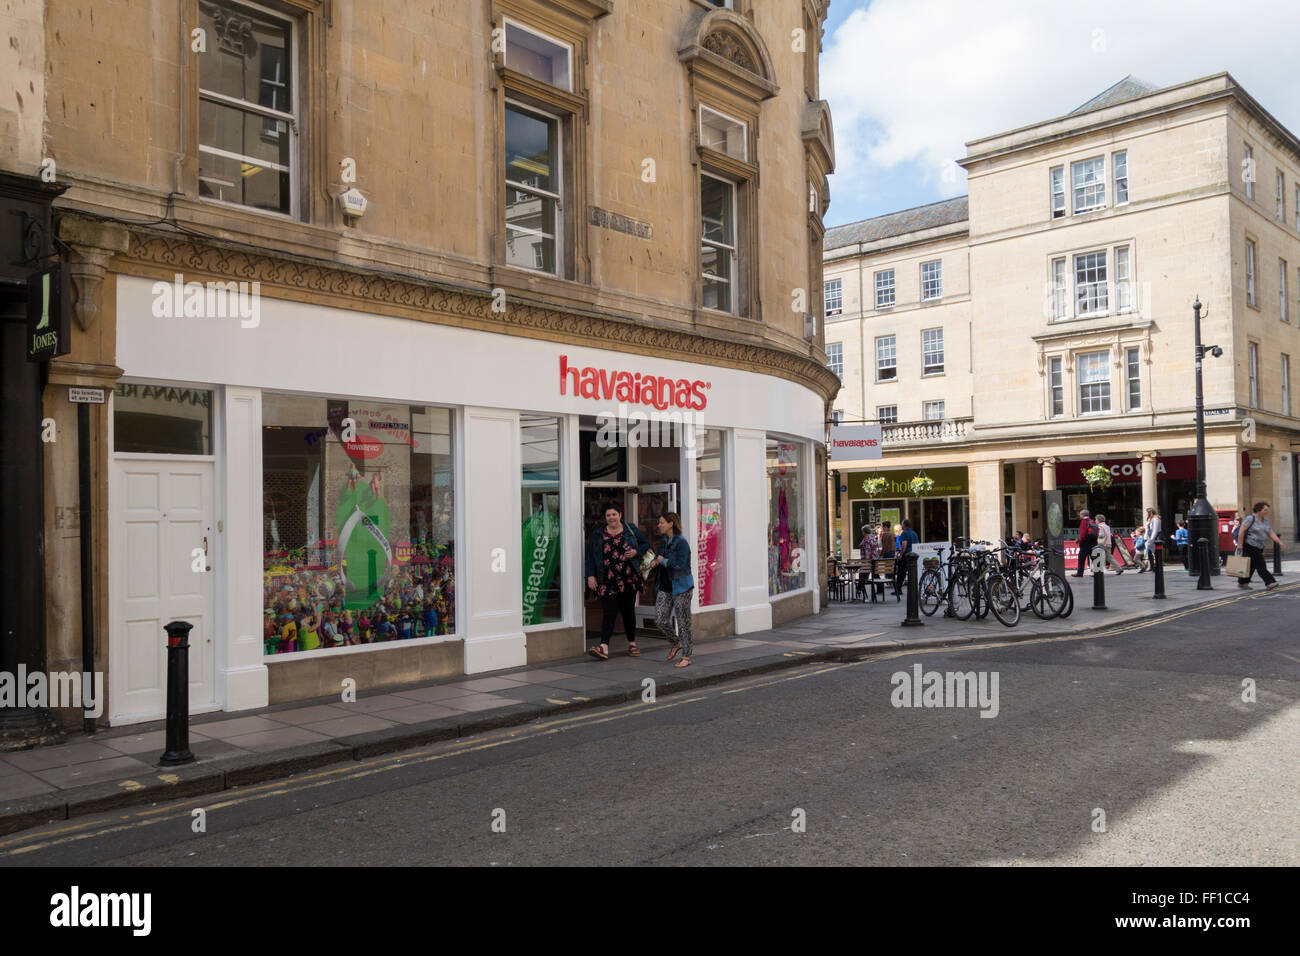 Havaianas Store in Bath, England Stock Photo